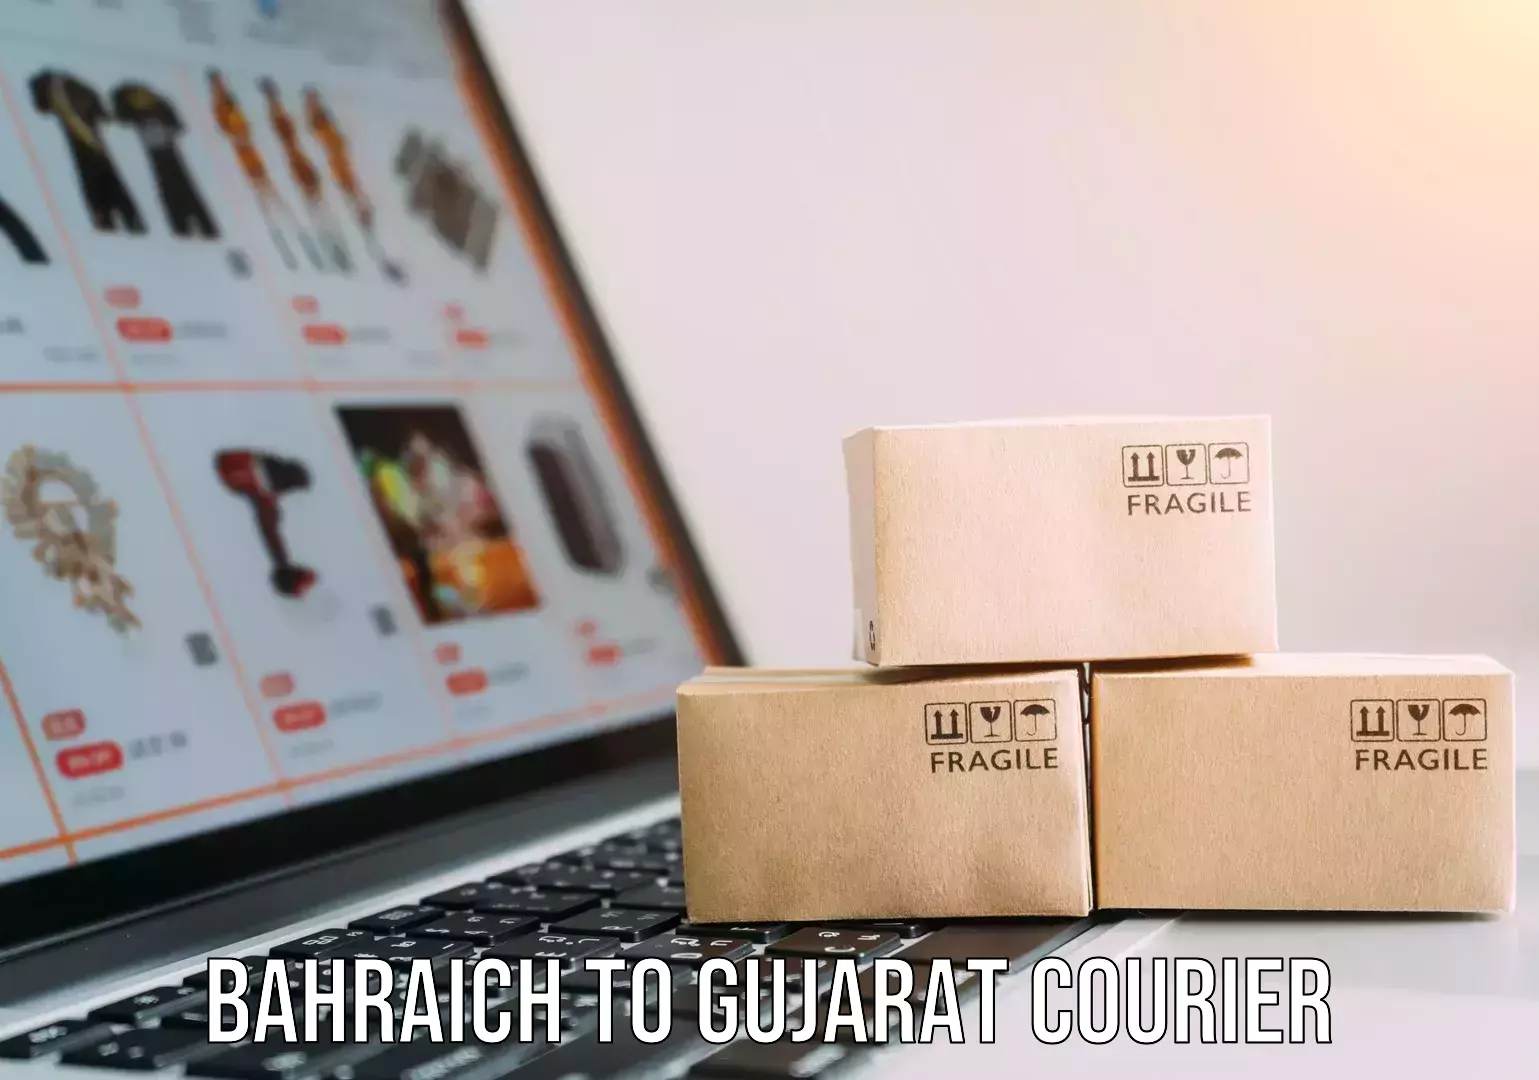 Express postal services Bahraich to Gujarat